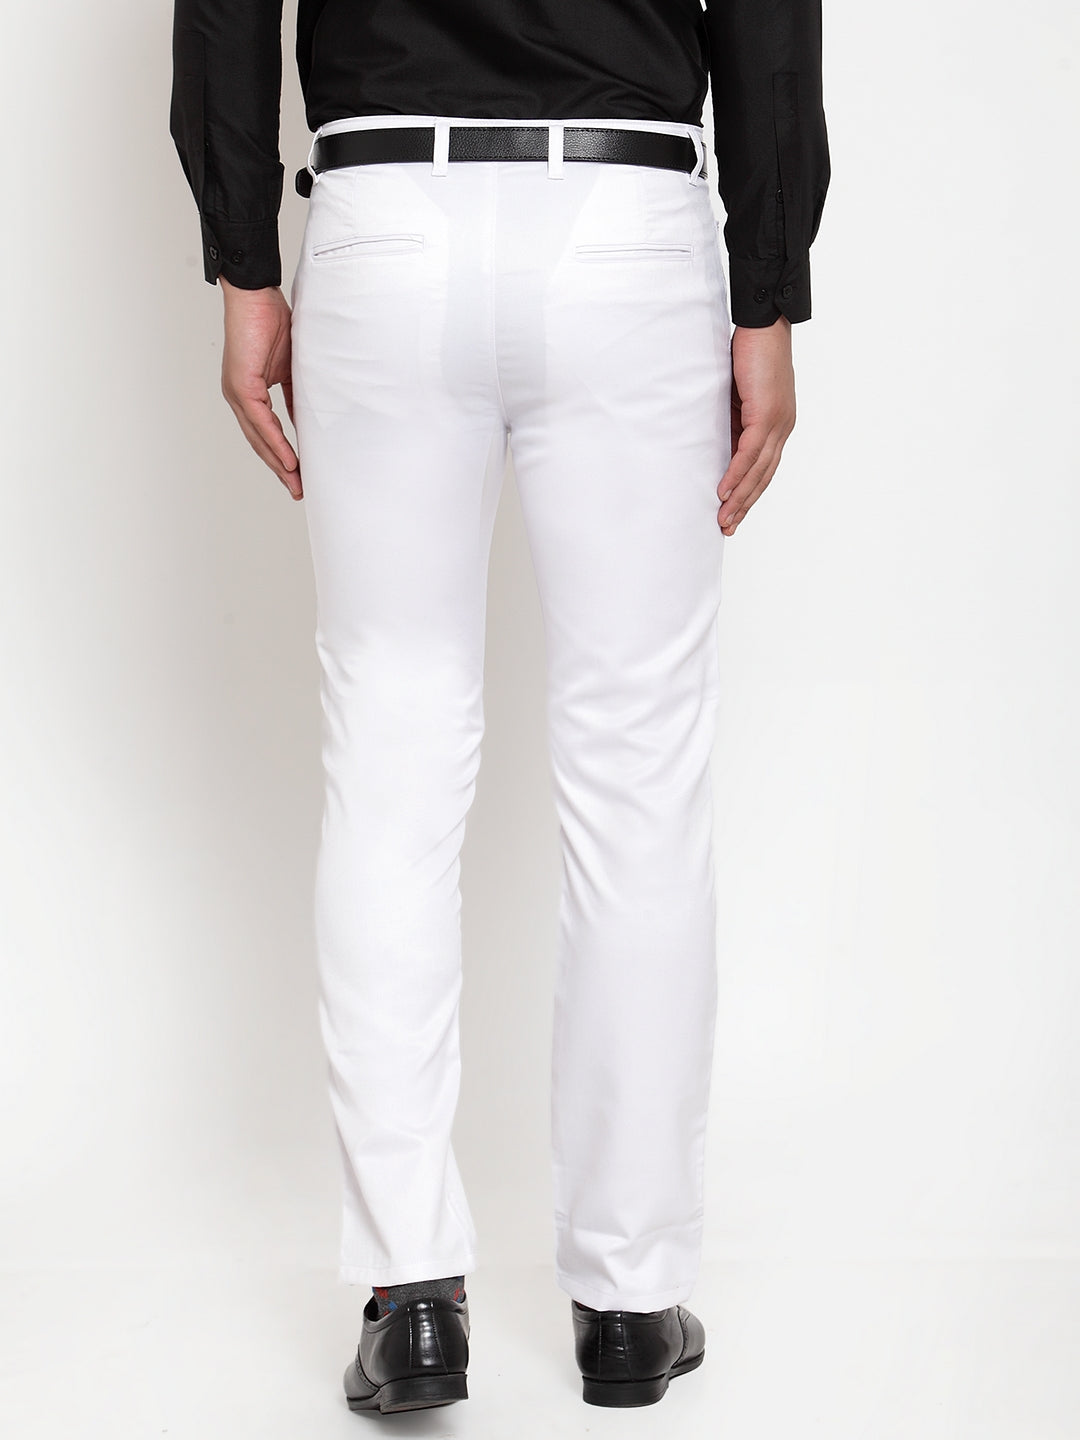 Jainish Men's White Tapered Fit Formal Trousers